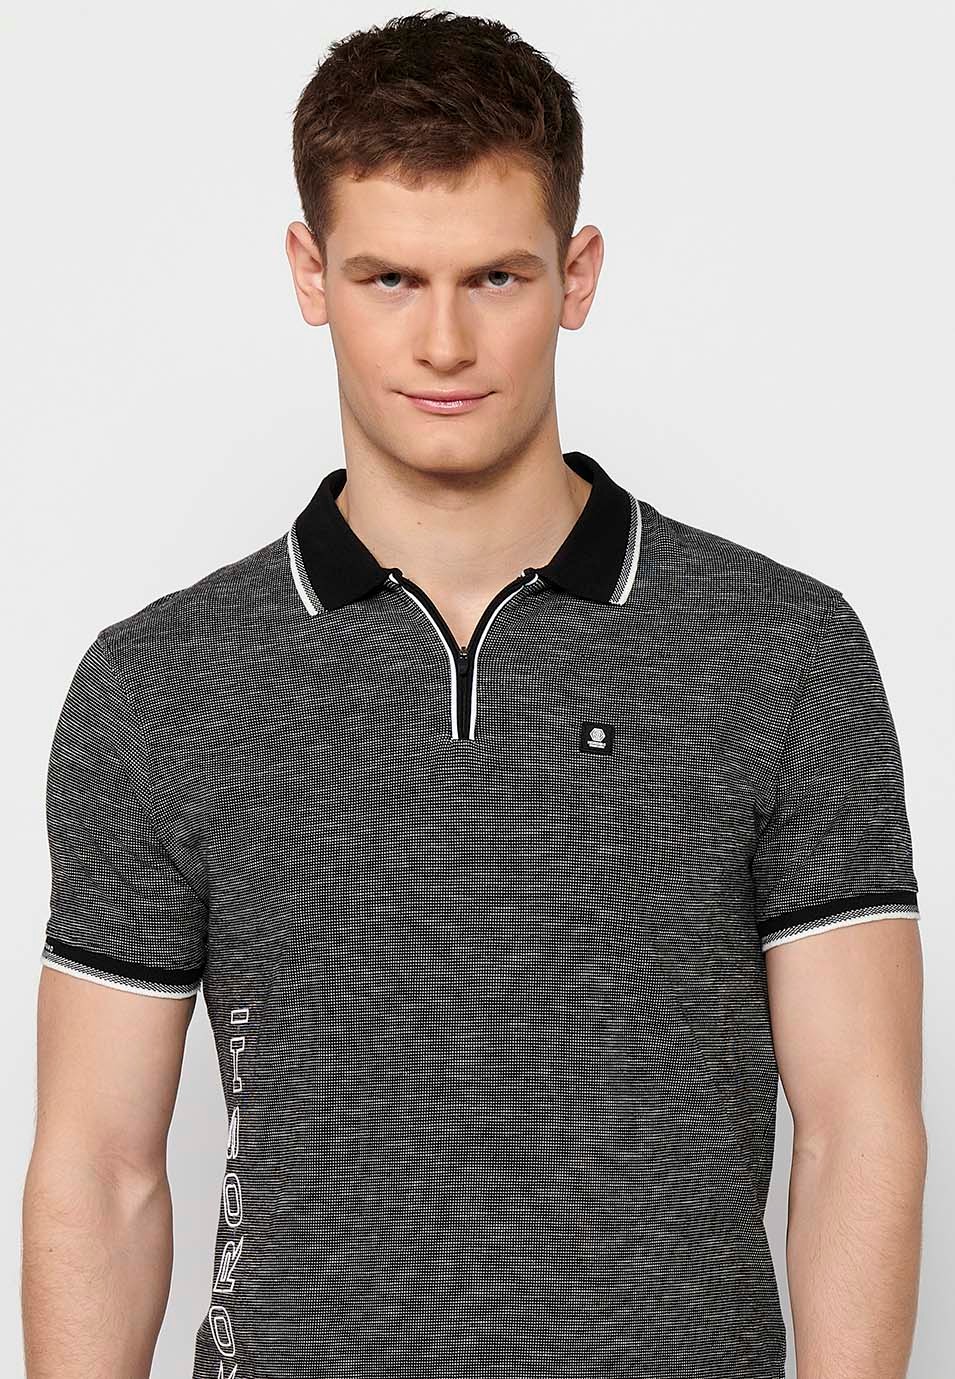 Black cotton short sleeve polo shirt for men